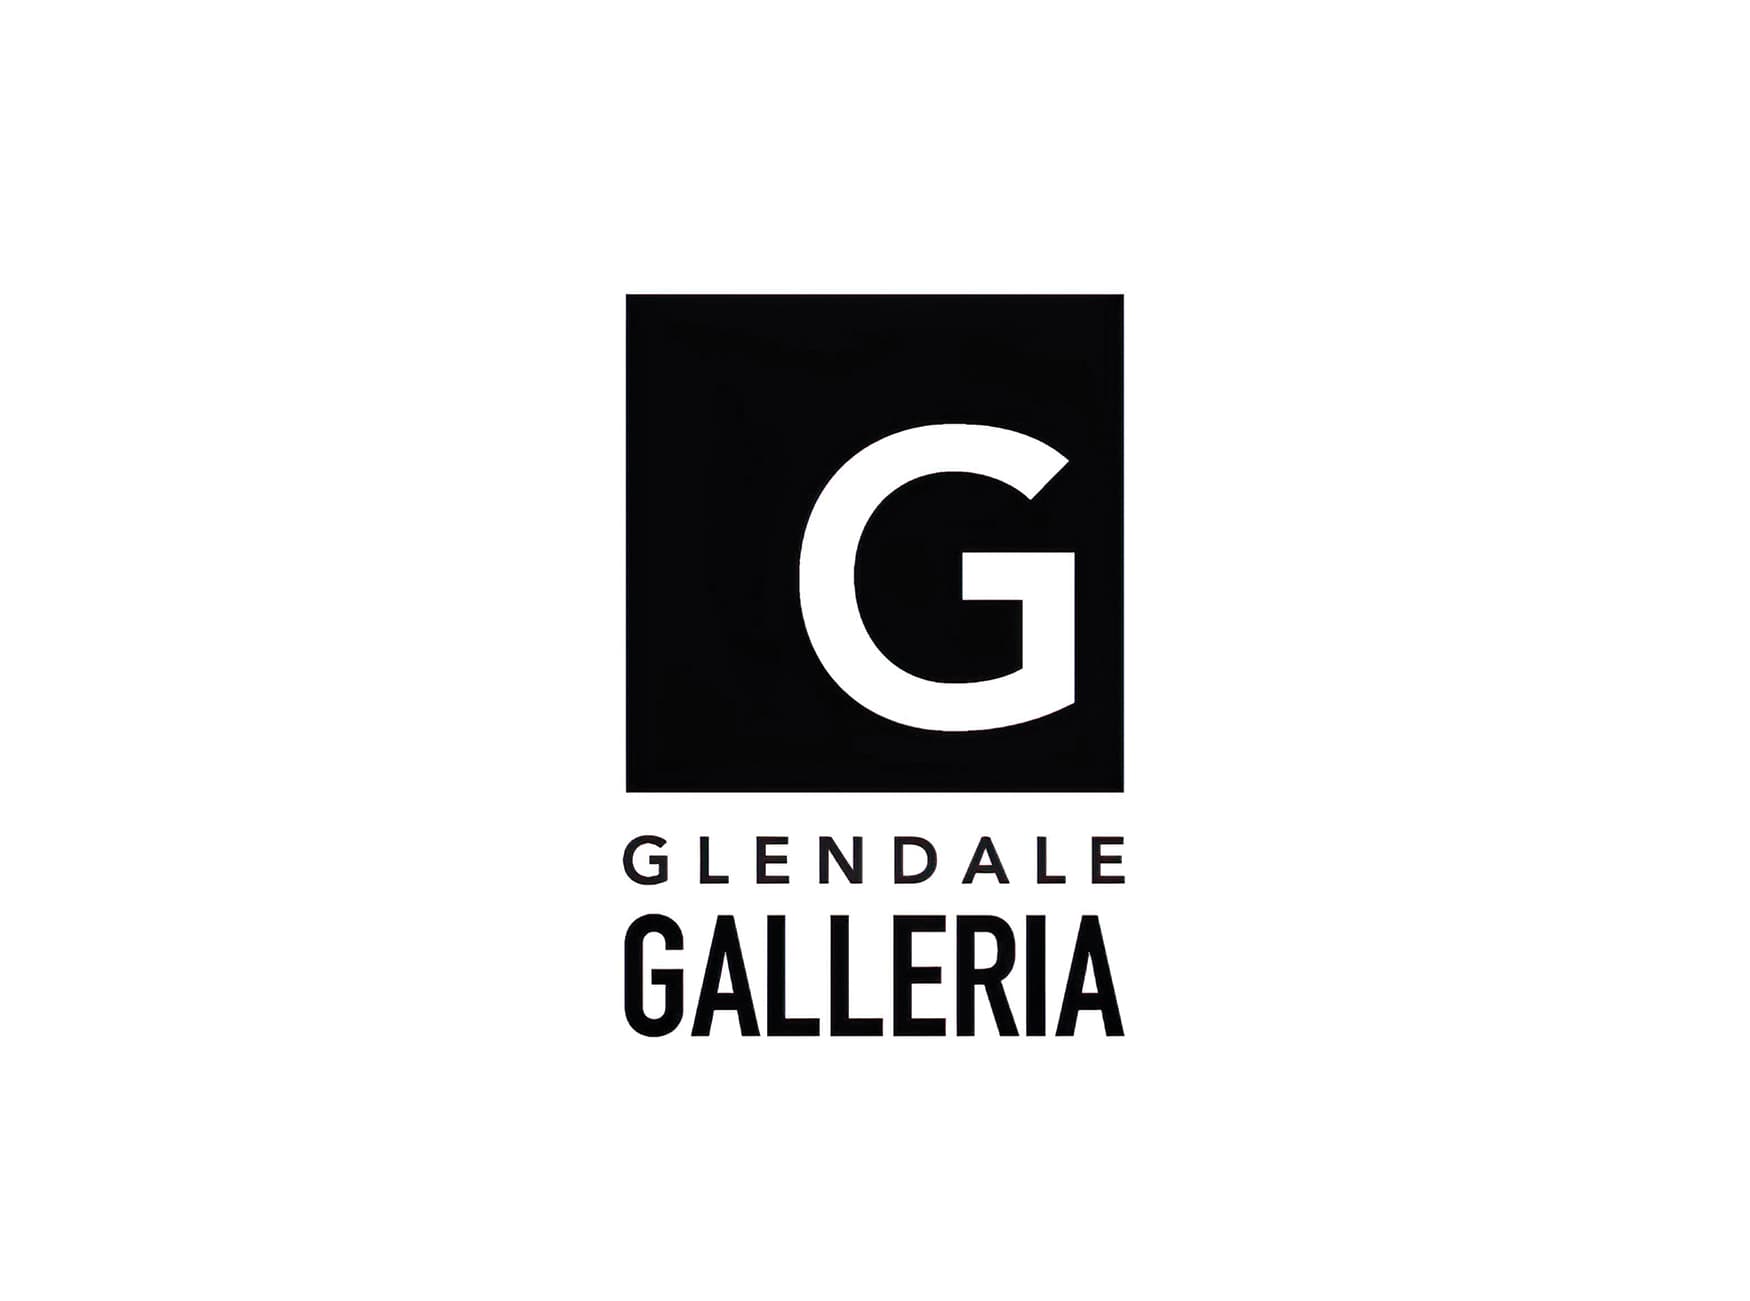 Glendale Galleria. A retail destination in Glendale, California. Project Branding and Logo design.